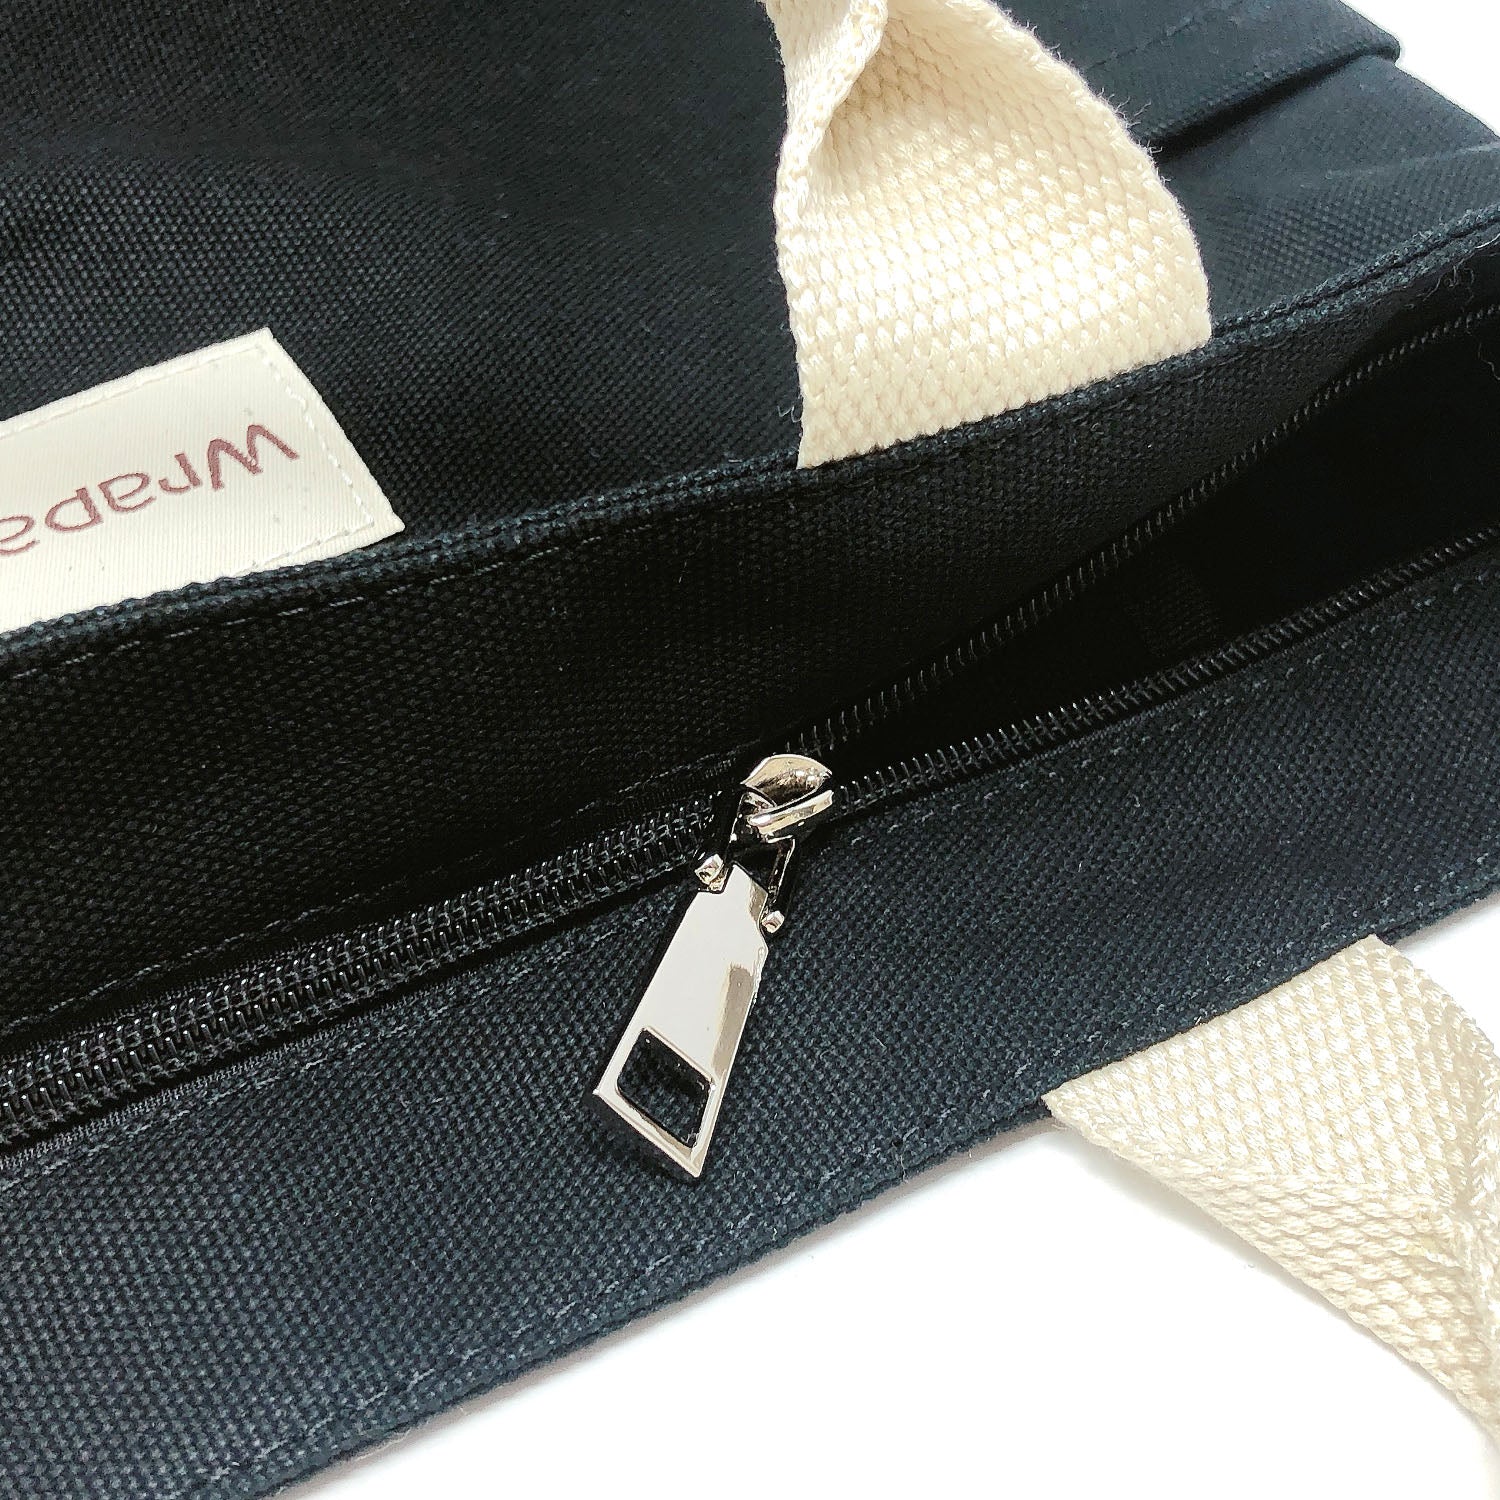 Wrapables Canvas Tote Bag for Women, Casual Cross Body Shoulder Handbag